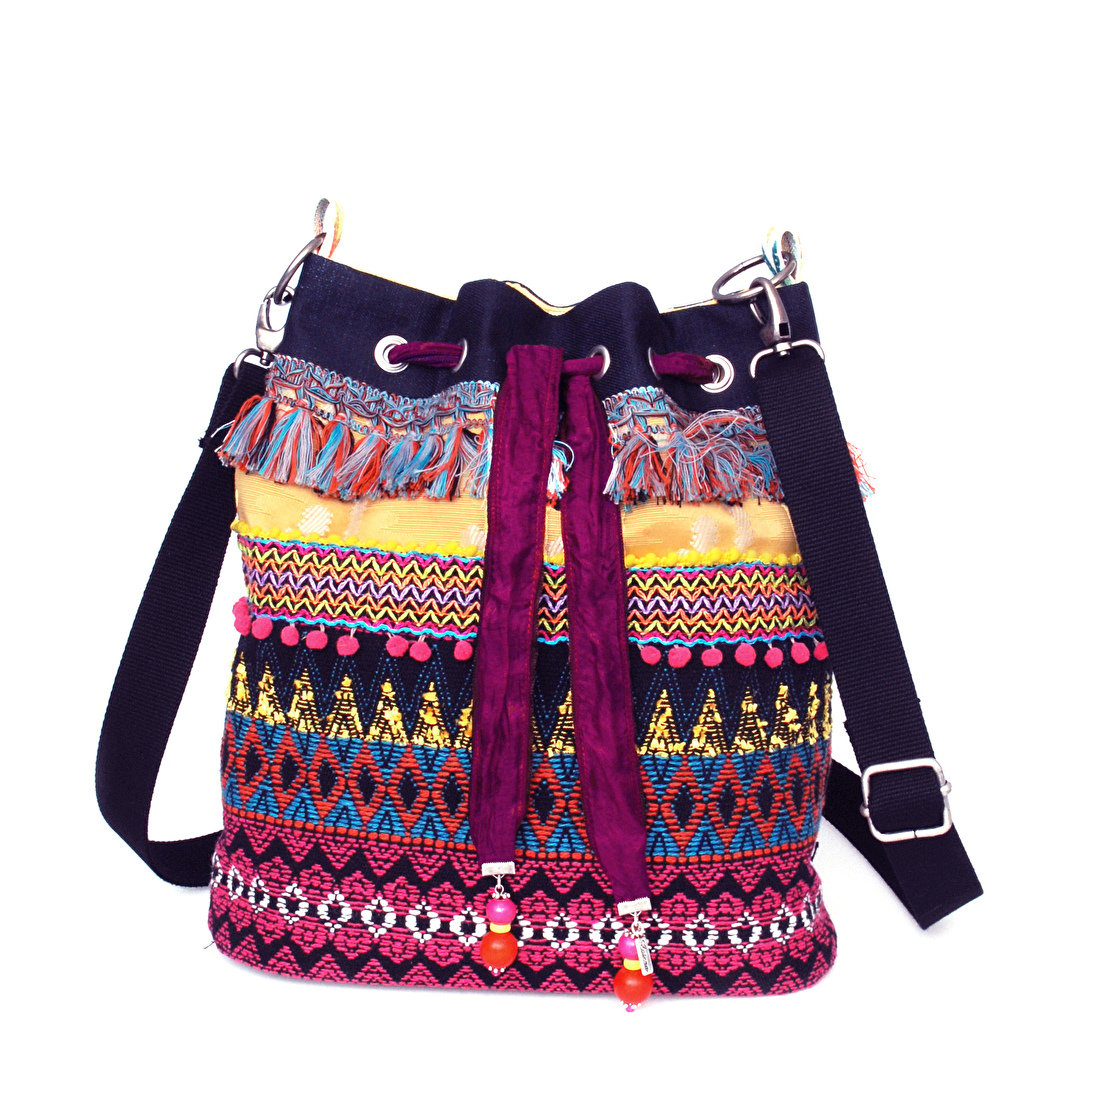 Handbags shoulder bags Navajo Aztec style | Catena Bags webshop